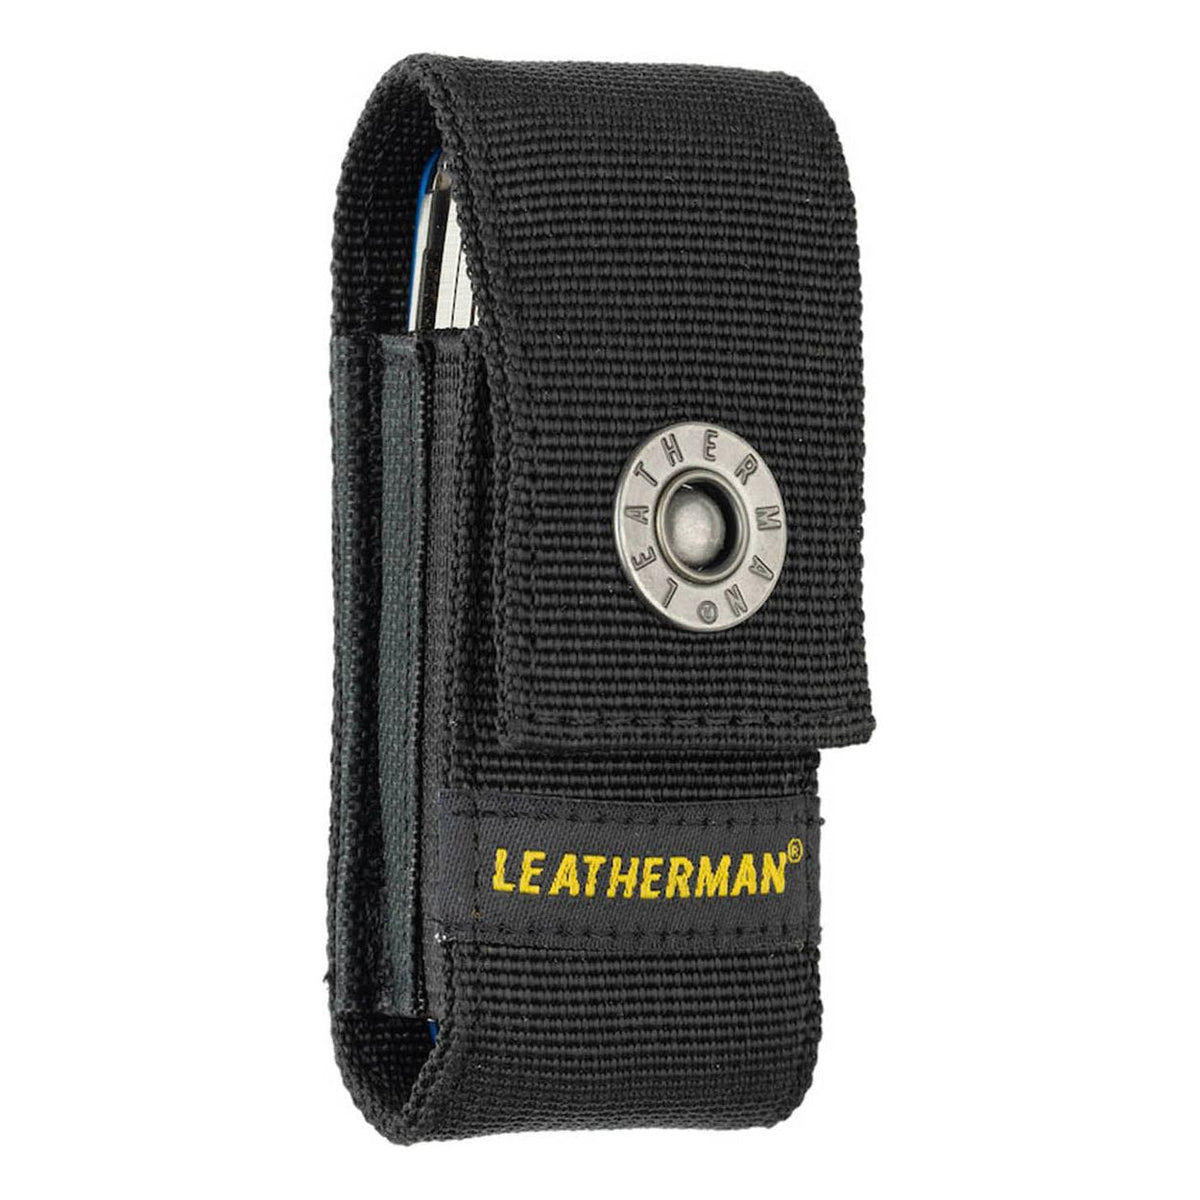 Leatherman Signal Multi Tool with Nylon Sheath - Coyote Tan